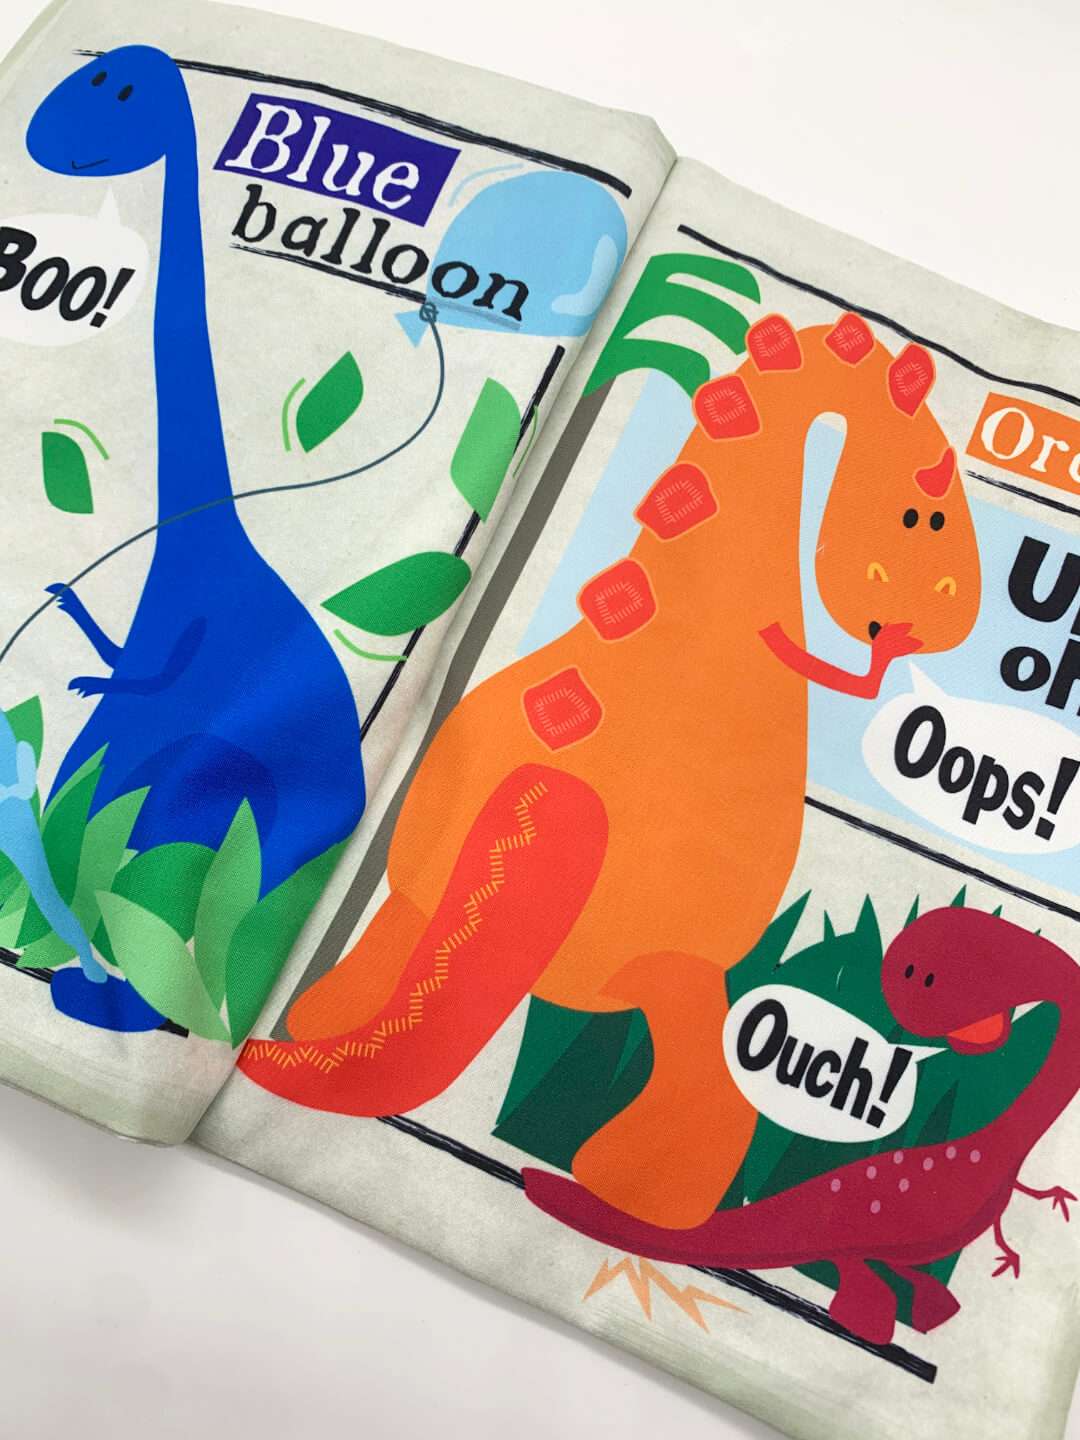 Crinkly Cloth Books: Rainbow Dinosaurs